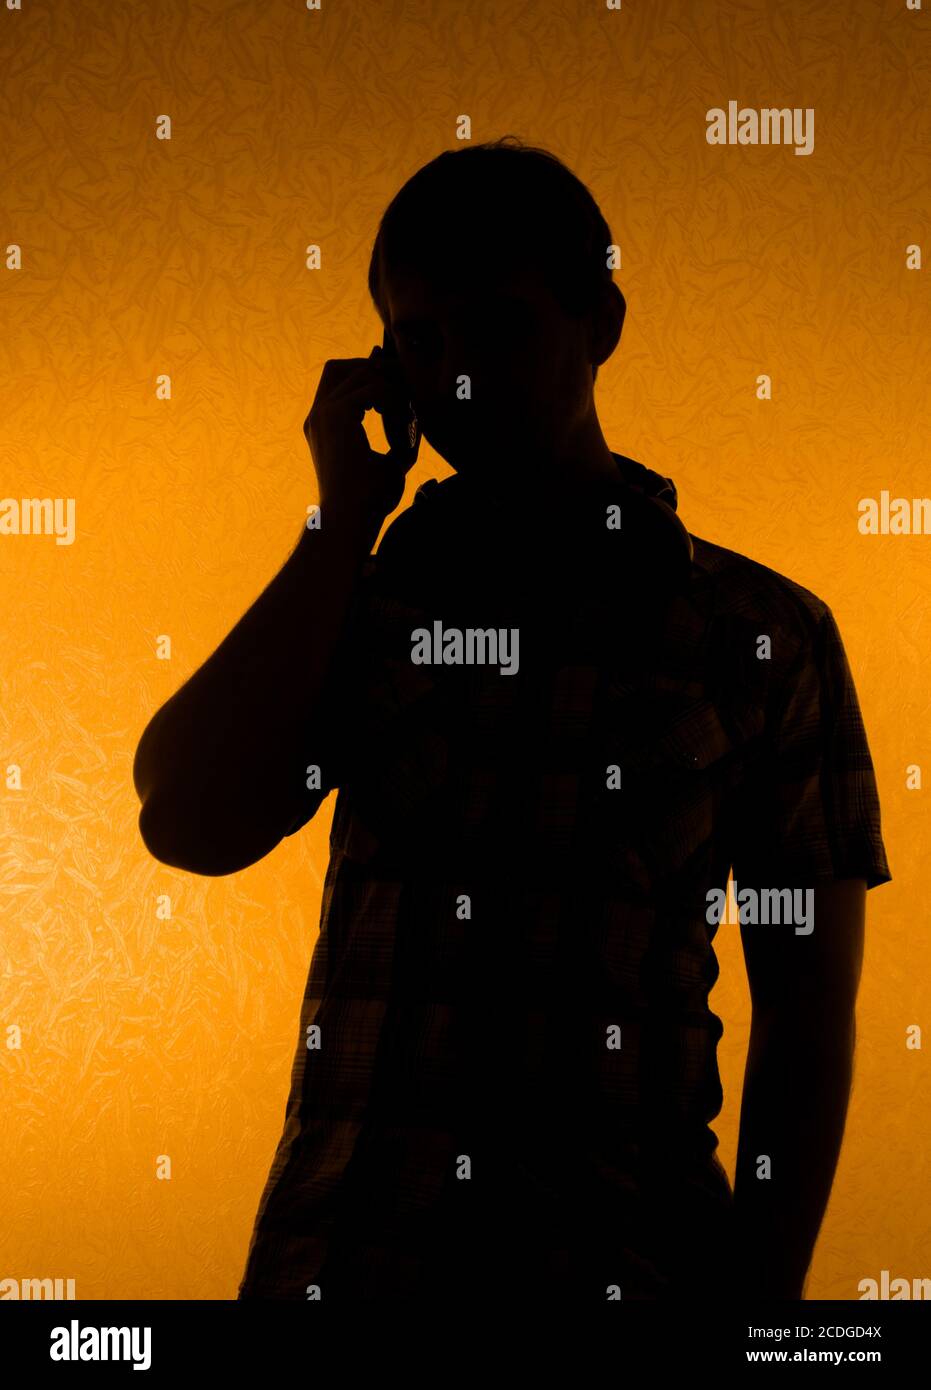 Silhouette of man speak over the phone Stock Photo